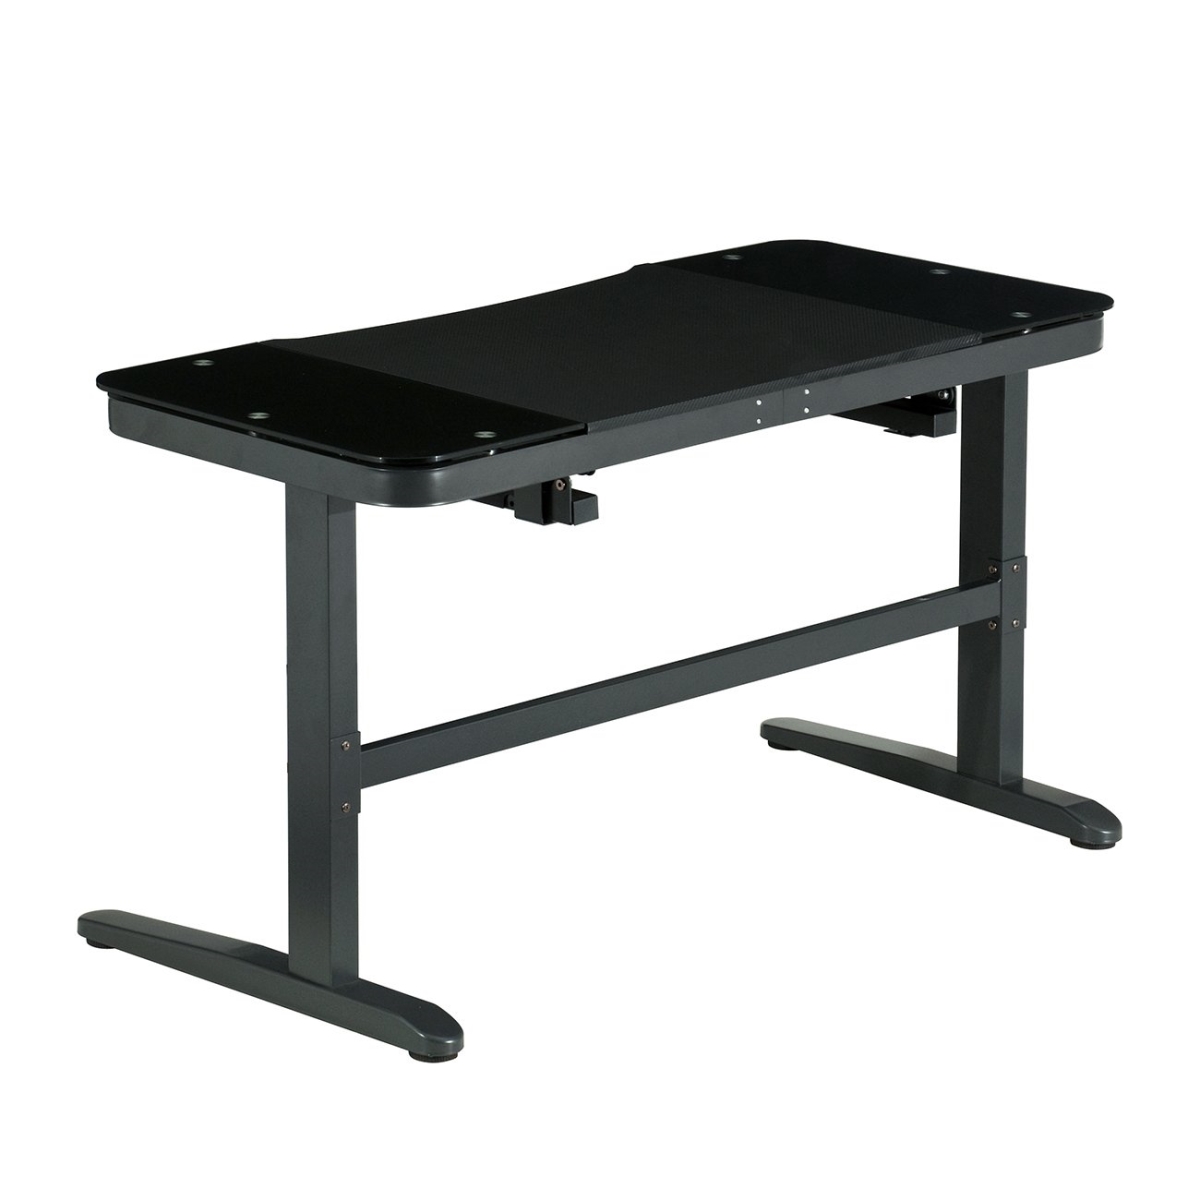 Rta-3840su-bk Ergonomic Pneumatic Adjustable Standing Desk, Black